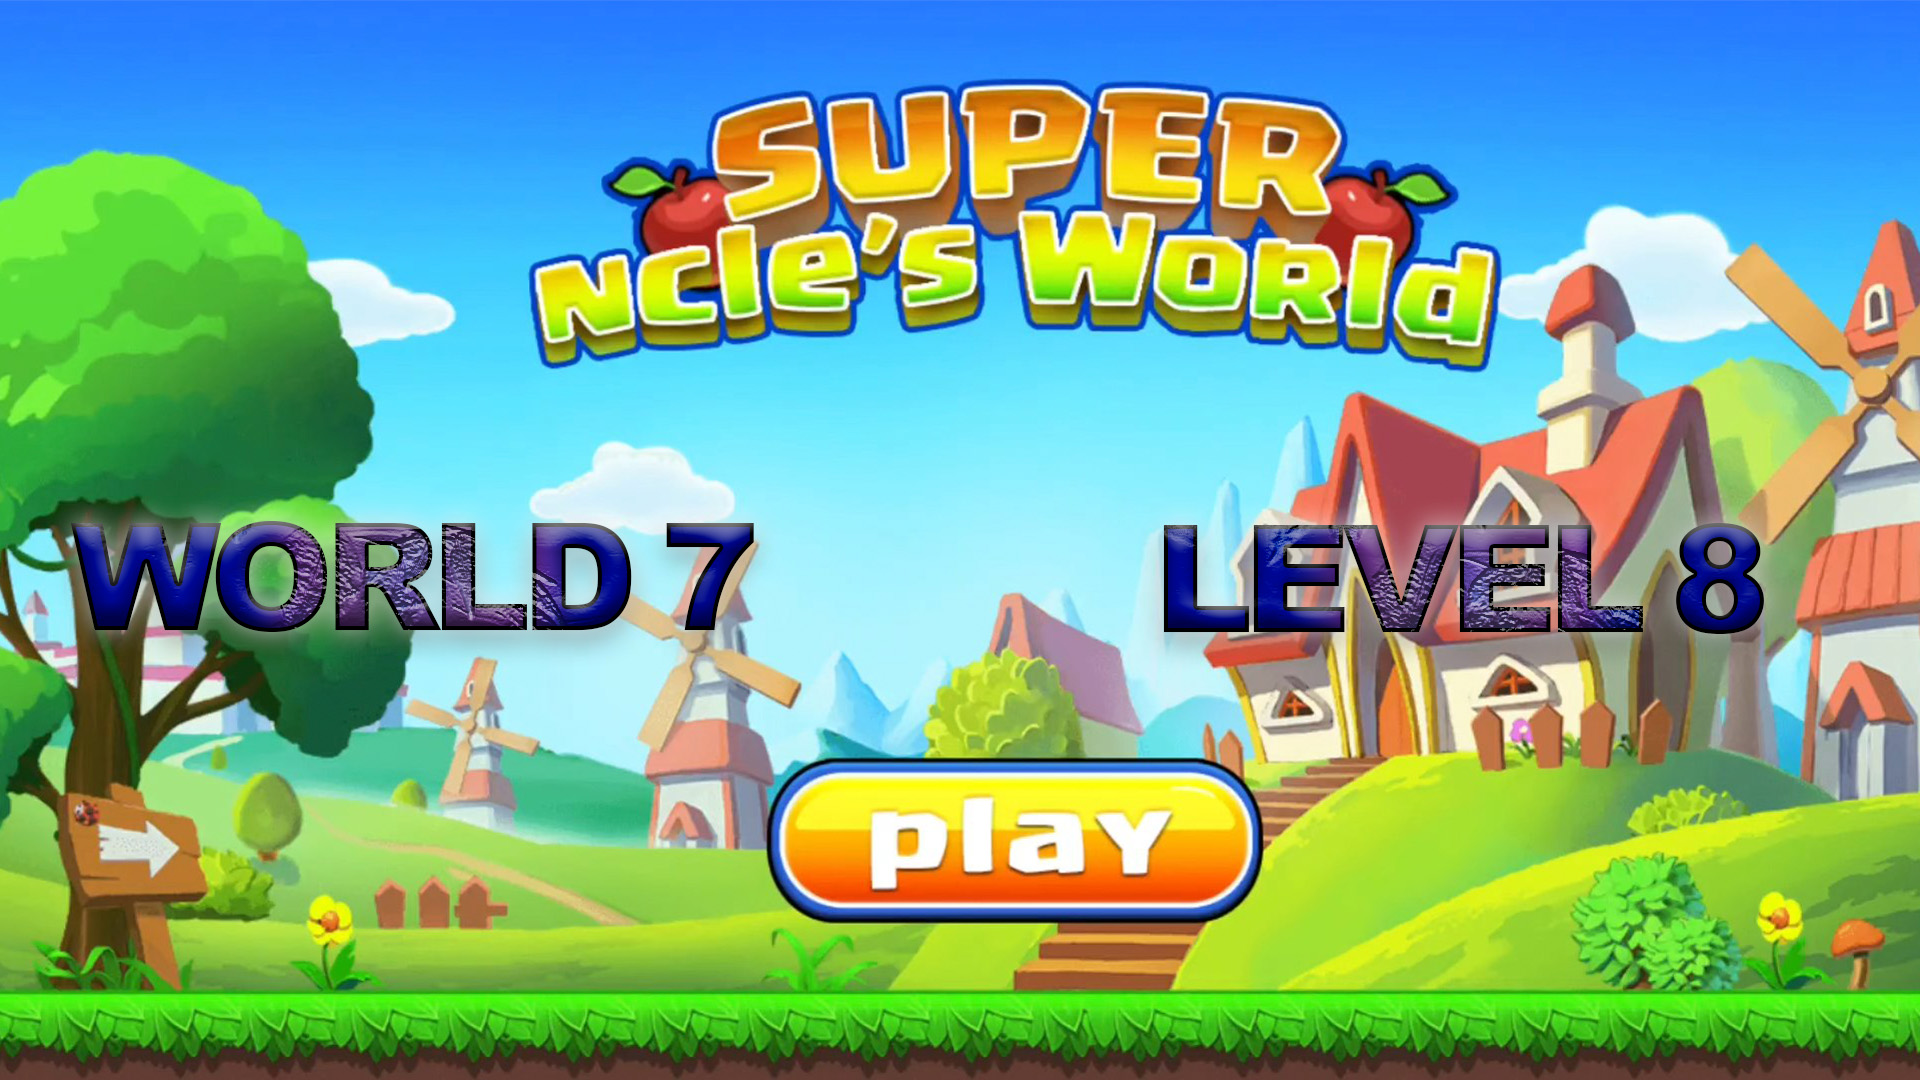 Super ncle's  World 7. Level 8.